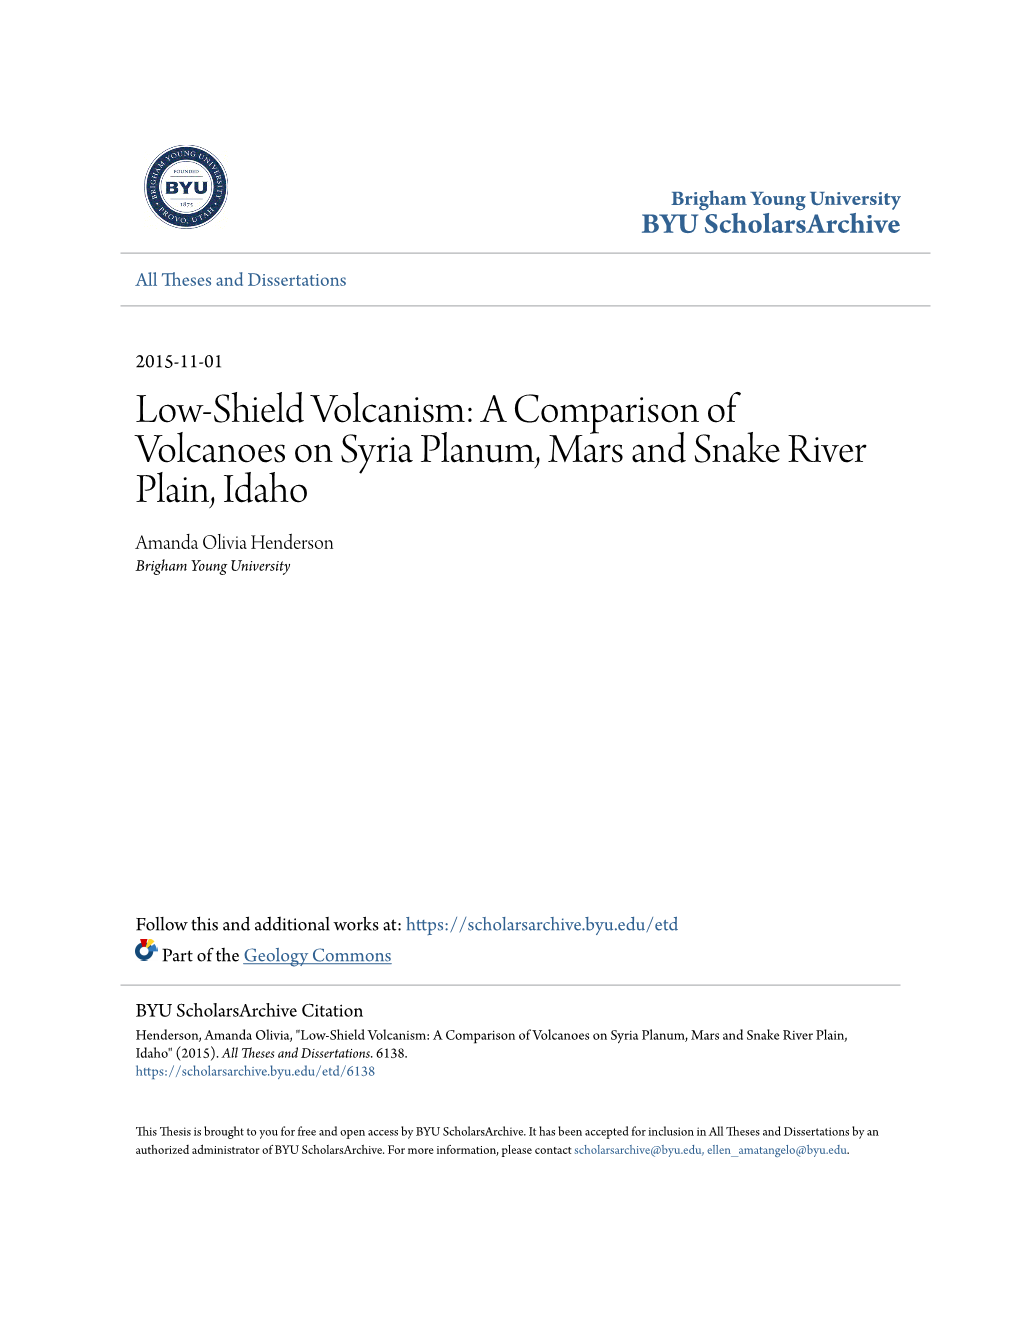 A Comparison of Volcanoes on Syria Planum, Mars and Snake River Plain, Idaho Amanda Olivia Henderson Brigham Young University